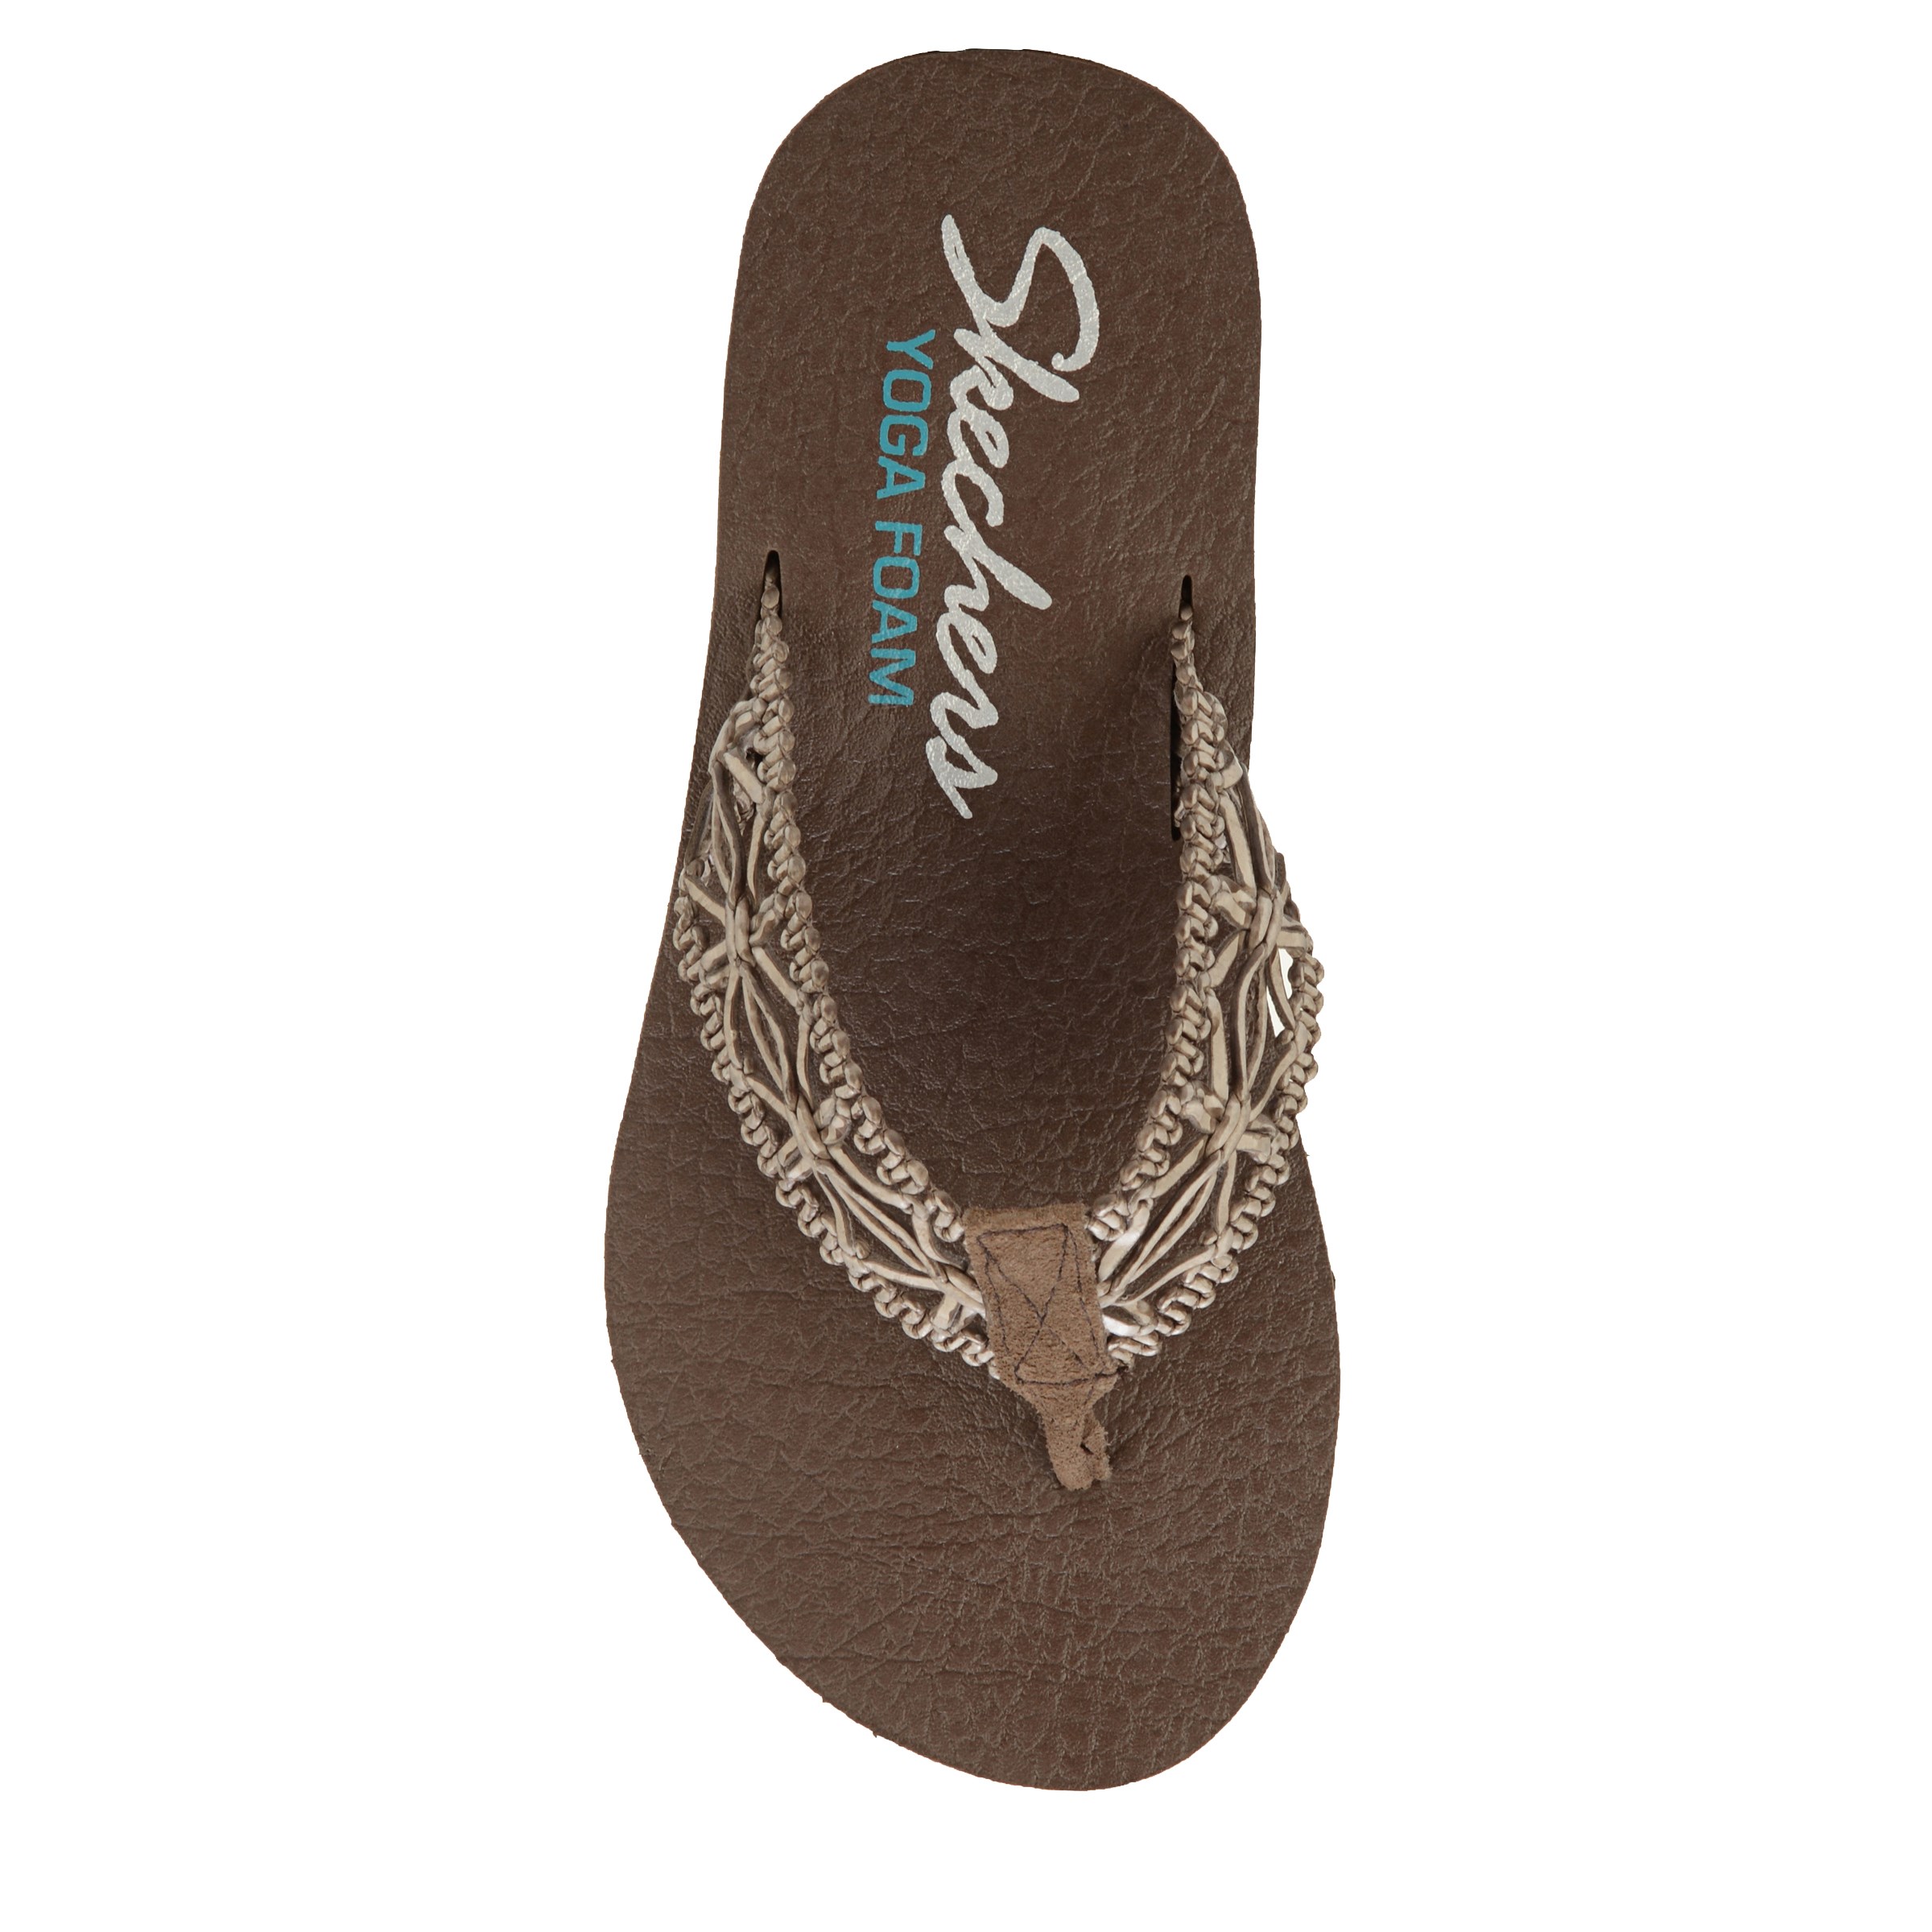 Buy Skechers Women's MEDITATION - DANCING Grey Thong Sandals for